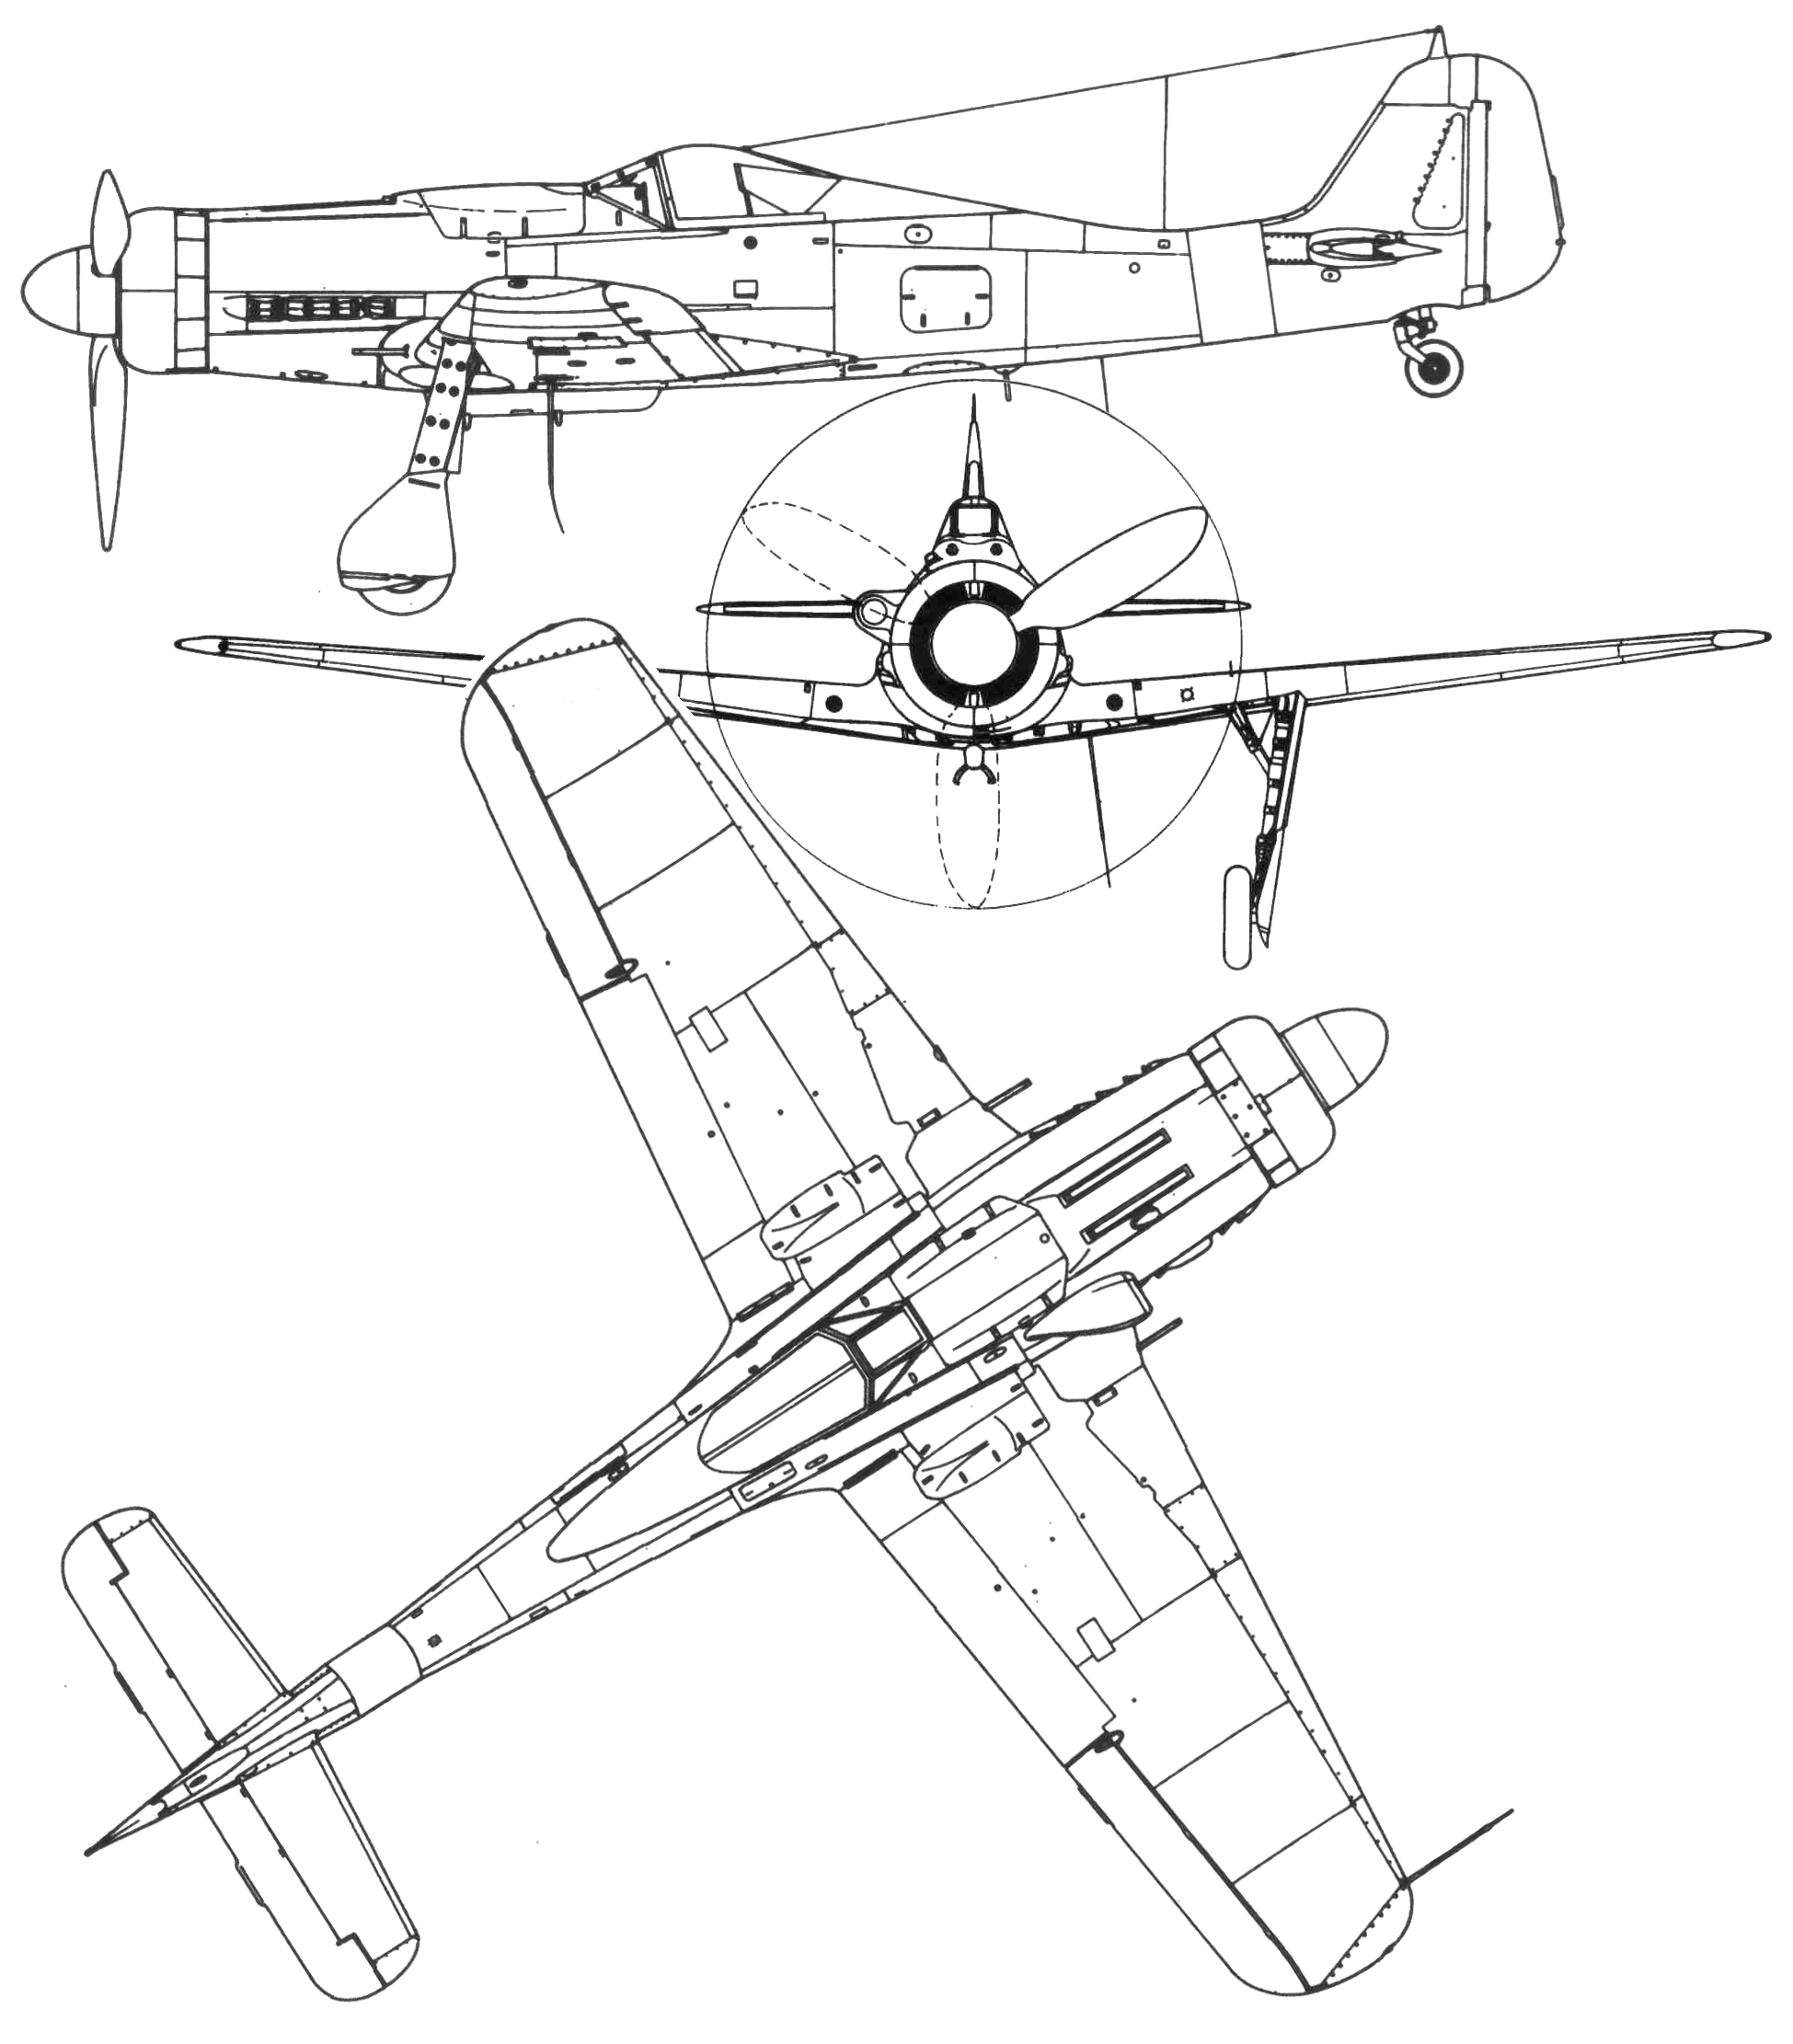 DCS: Fw 190 D-9 Dora